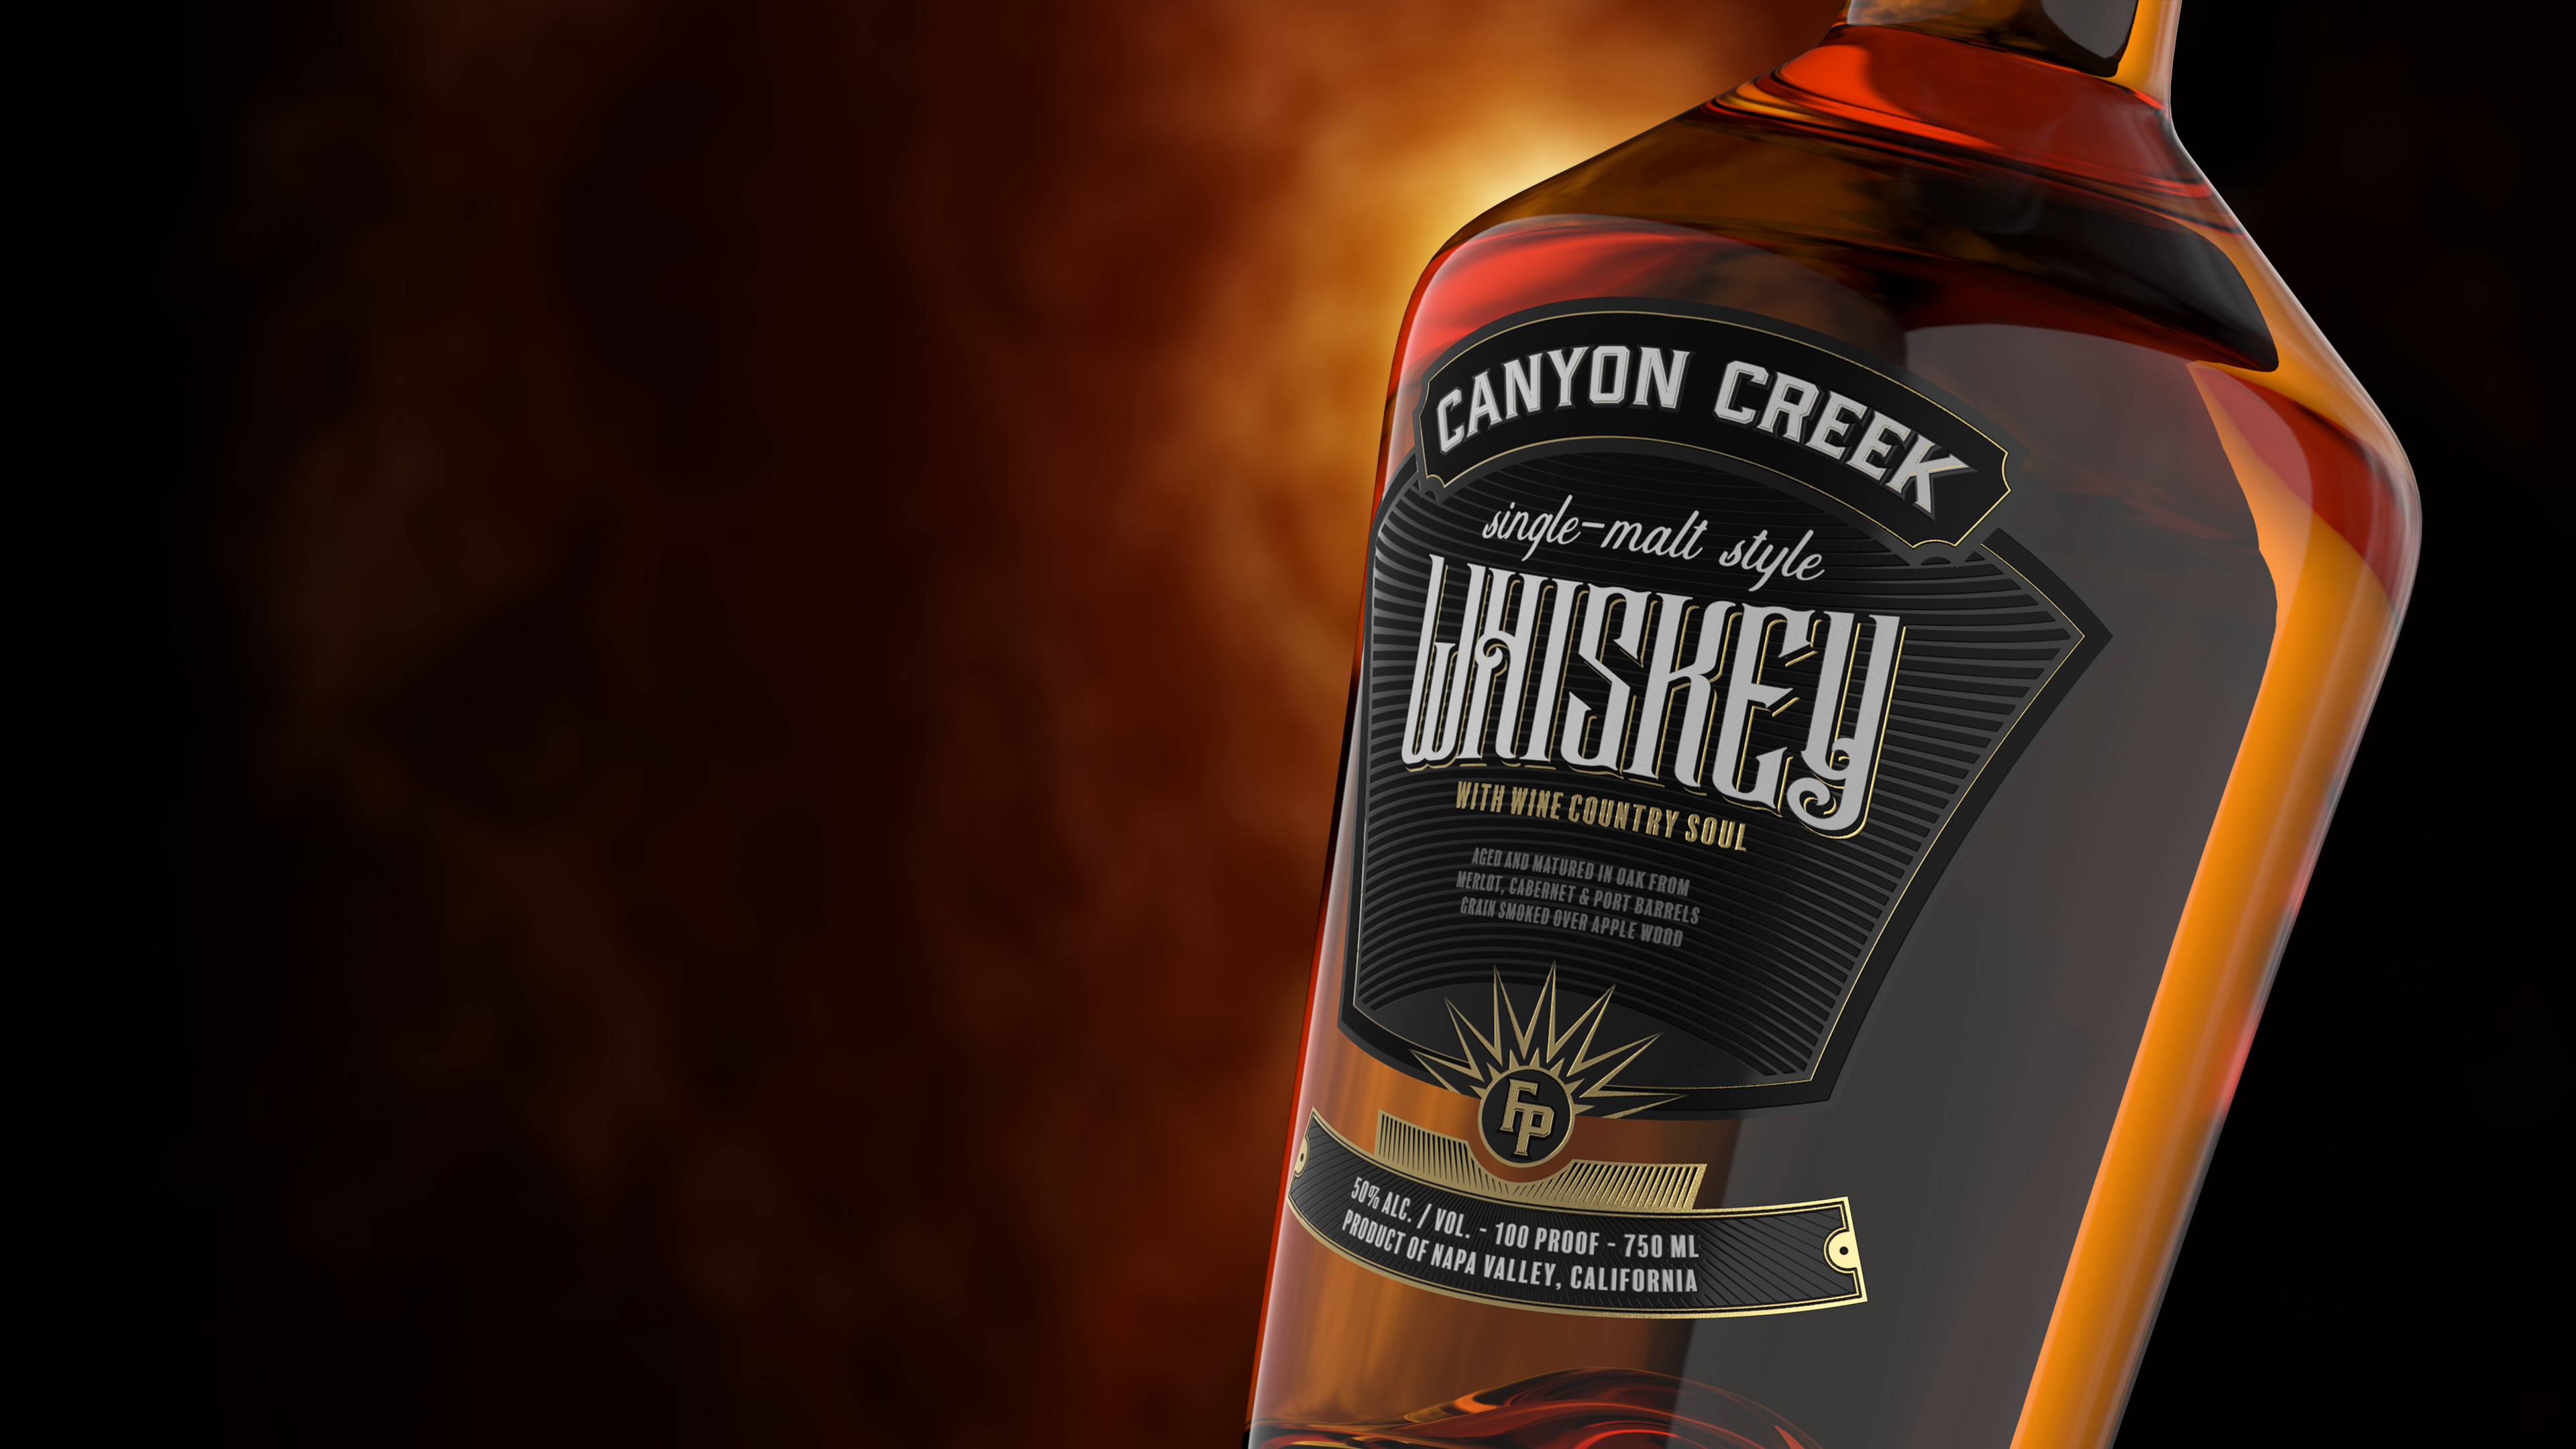 Canyon Creek Whiskey – Product Visualization